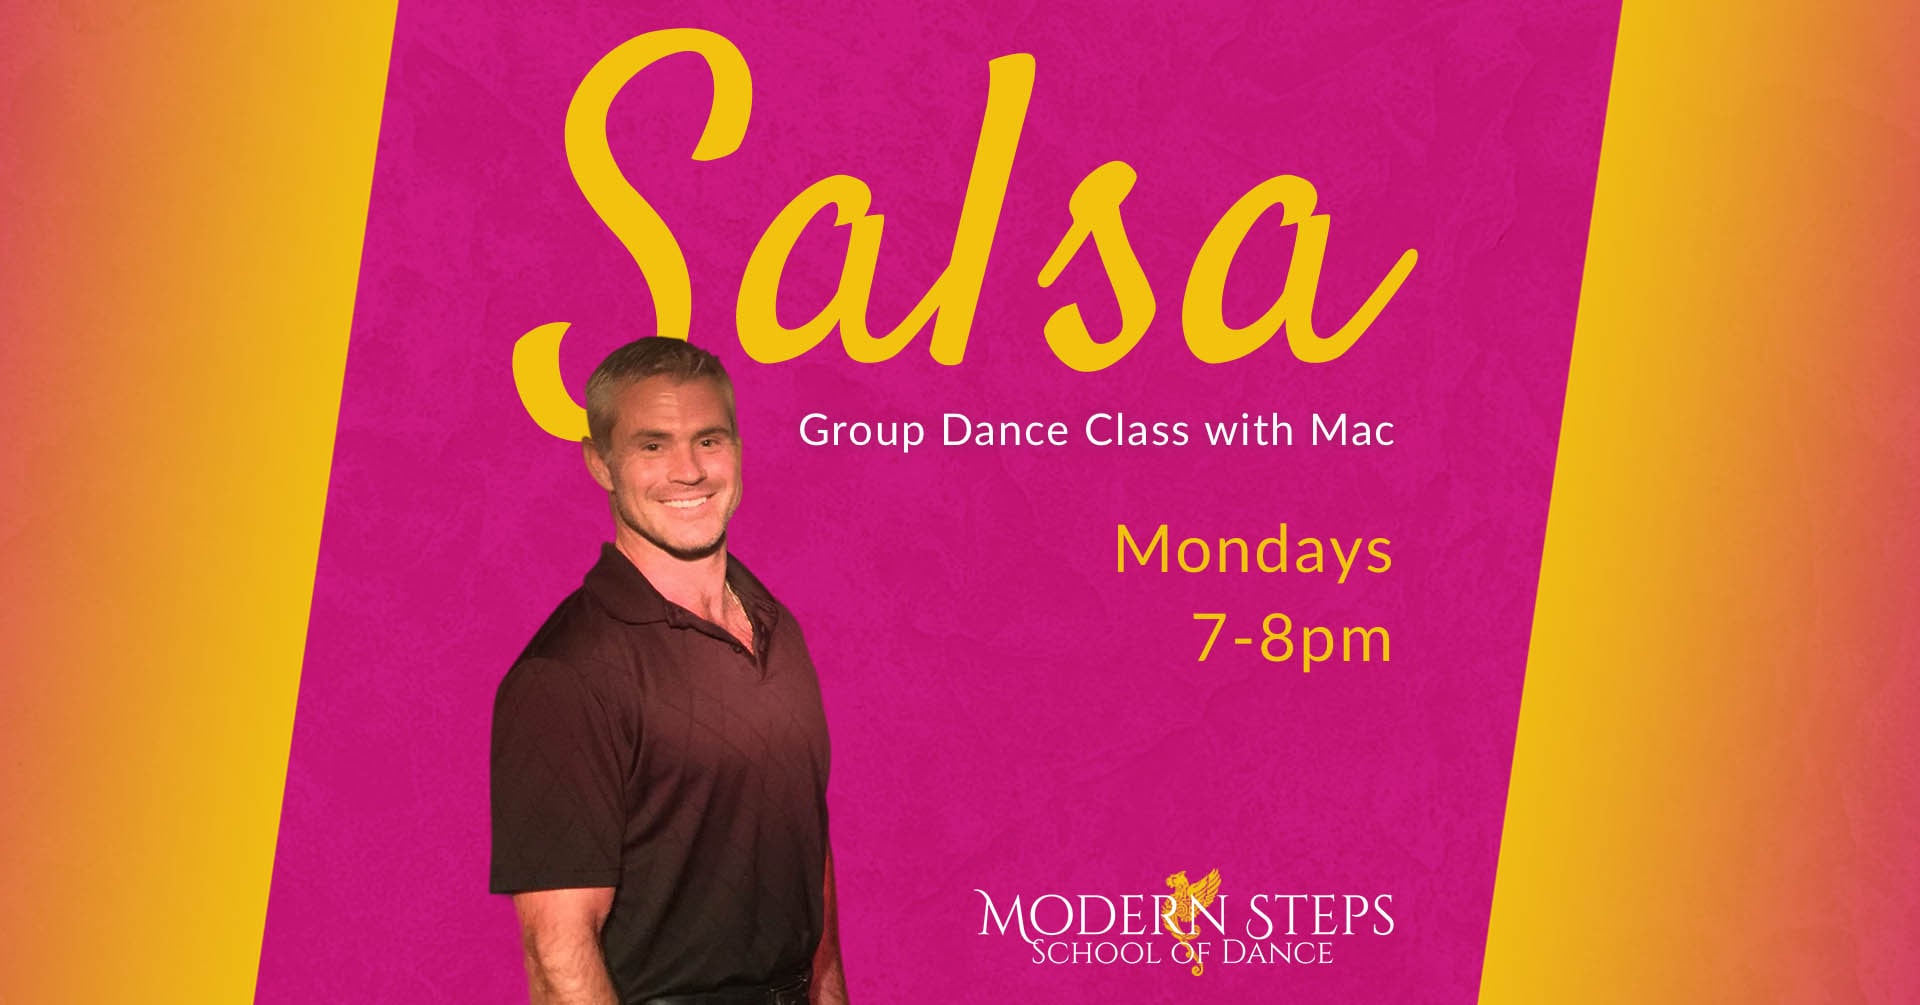 Modern Steps School of Dance Naples Florida The Salsa Dance Classes - Group Ballroom Dance Lessons - Naples Florida Things to Do